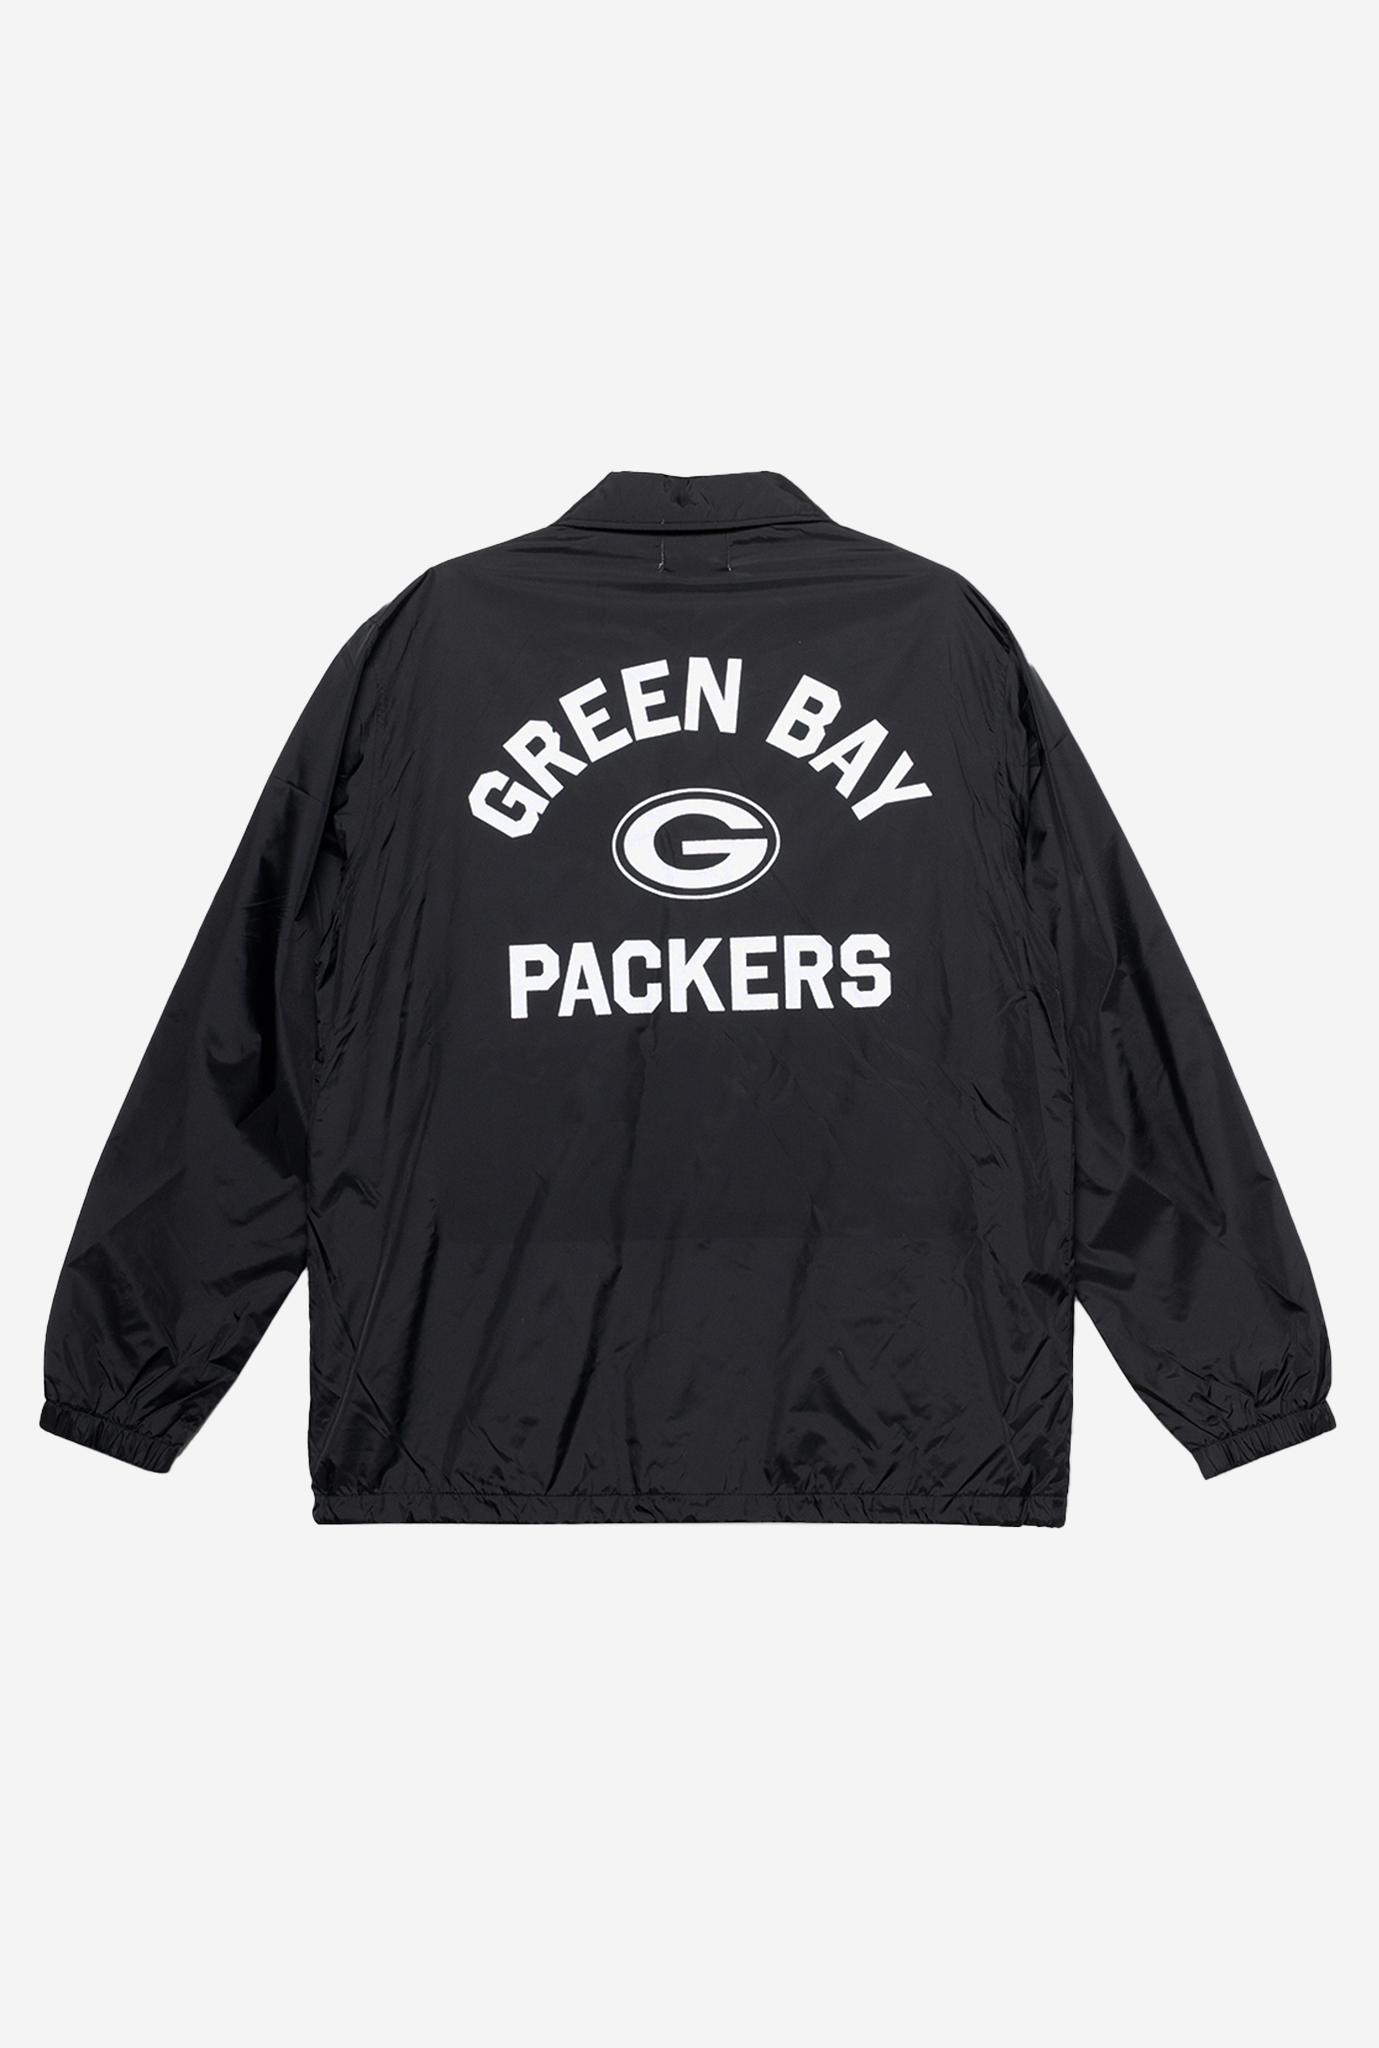 Green Bay Packers Coach Jacket - Black